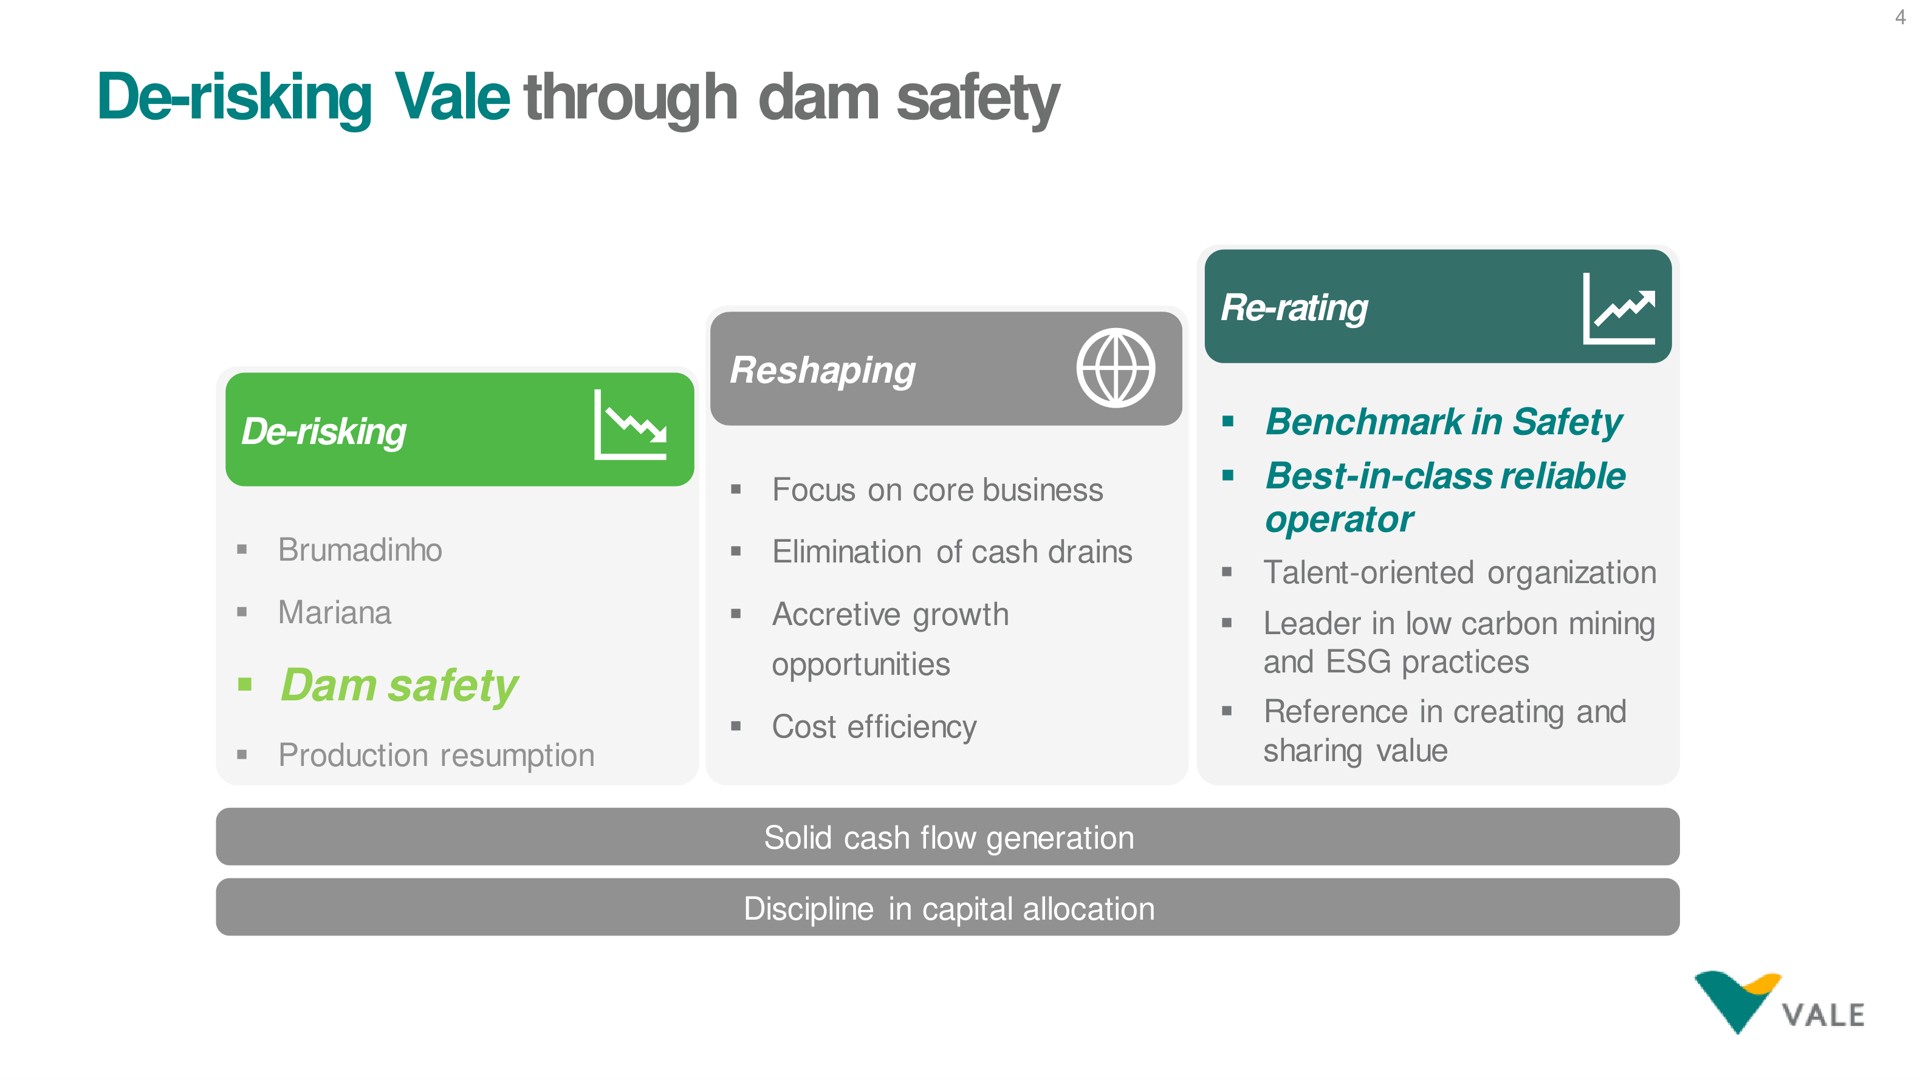 risking vale through dam safety | Vale